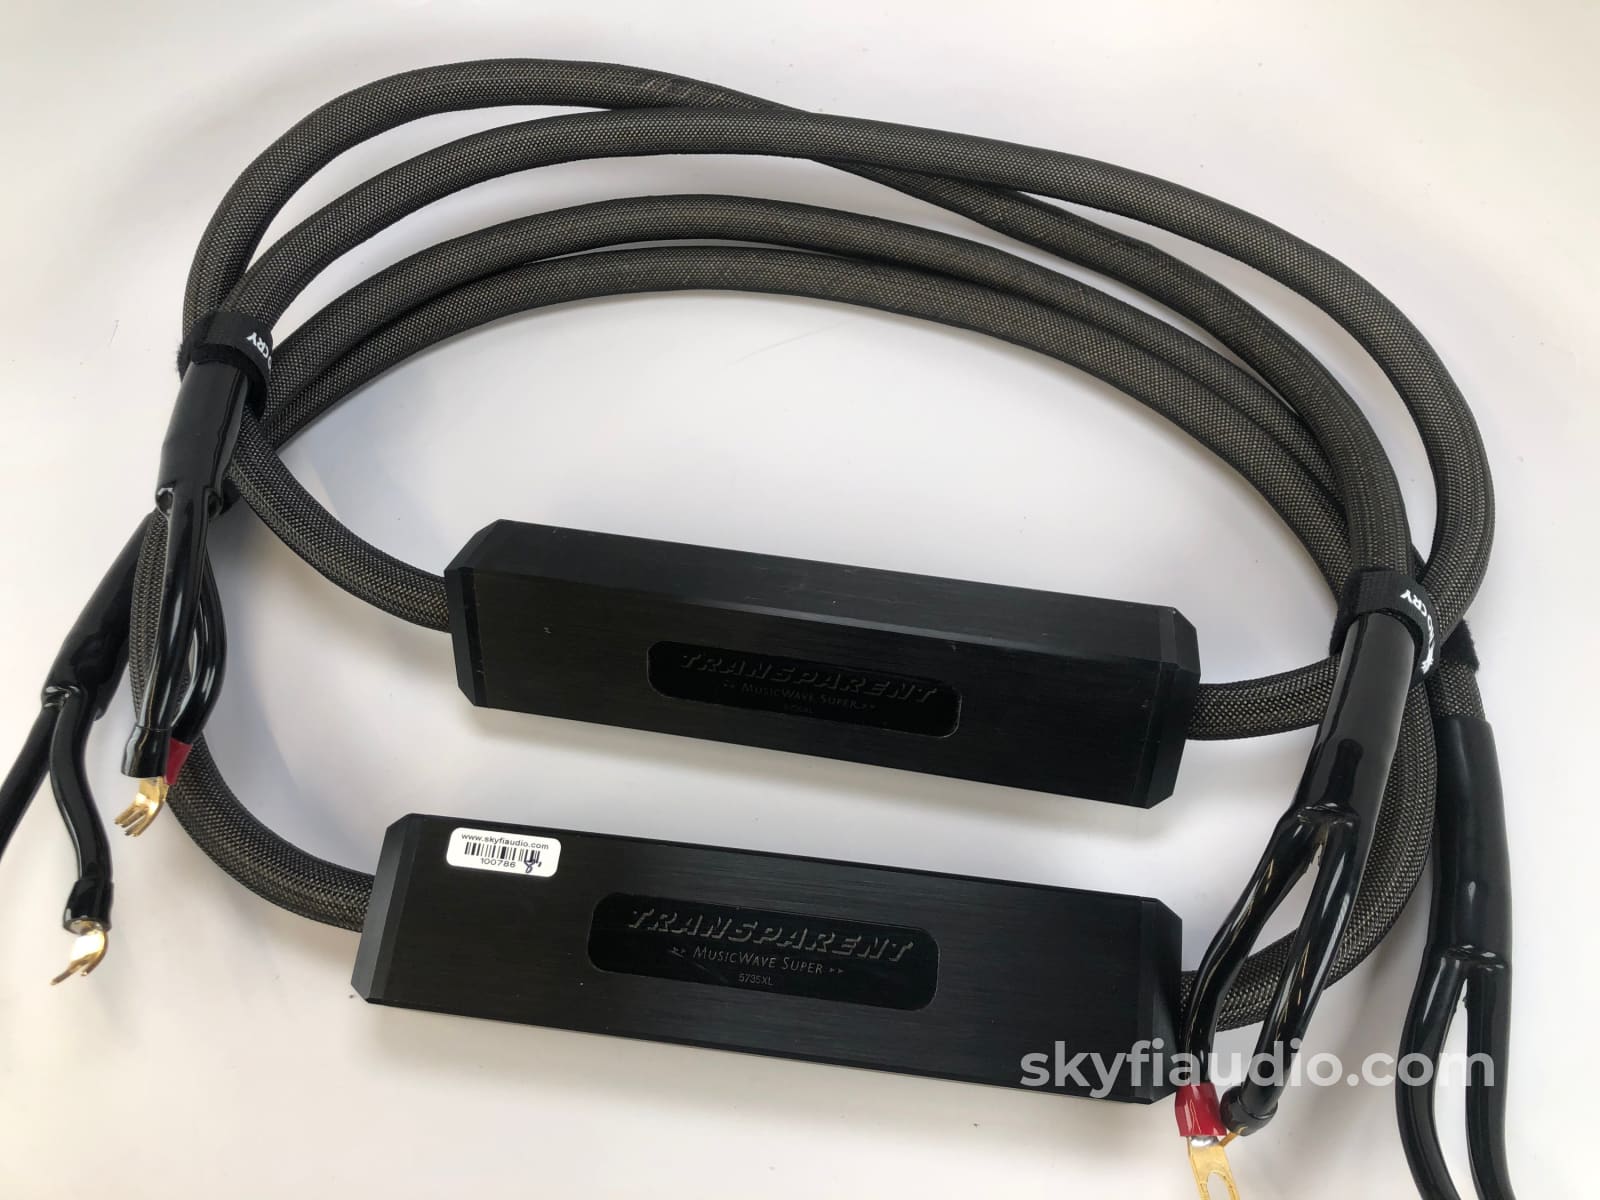 Transparent Audio - Musicwave Super 5735Xl Speaker Cables With Spades 8